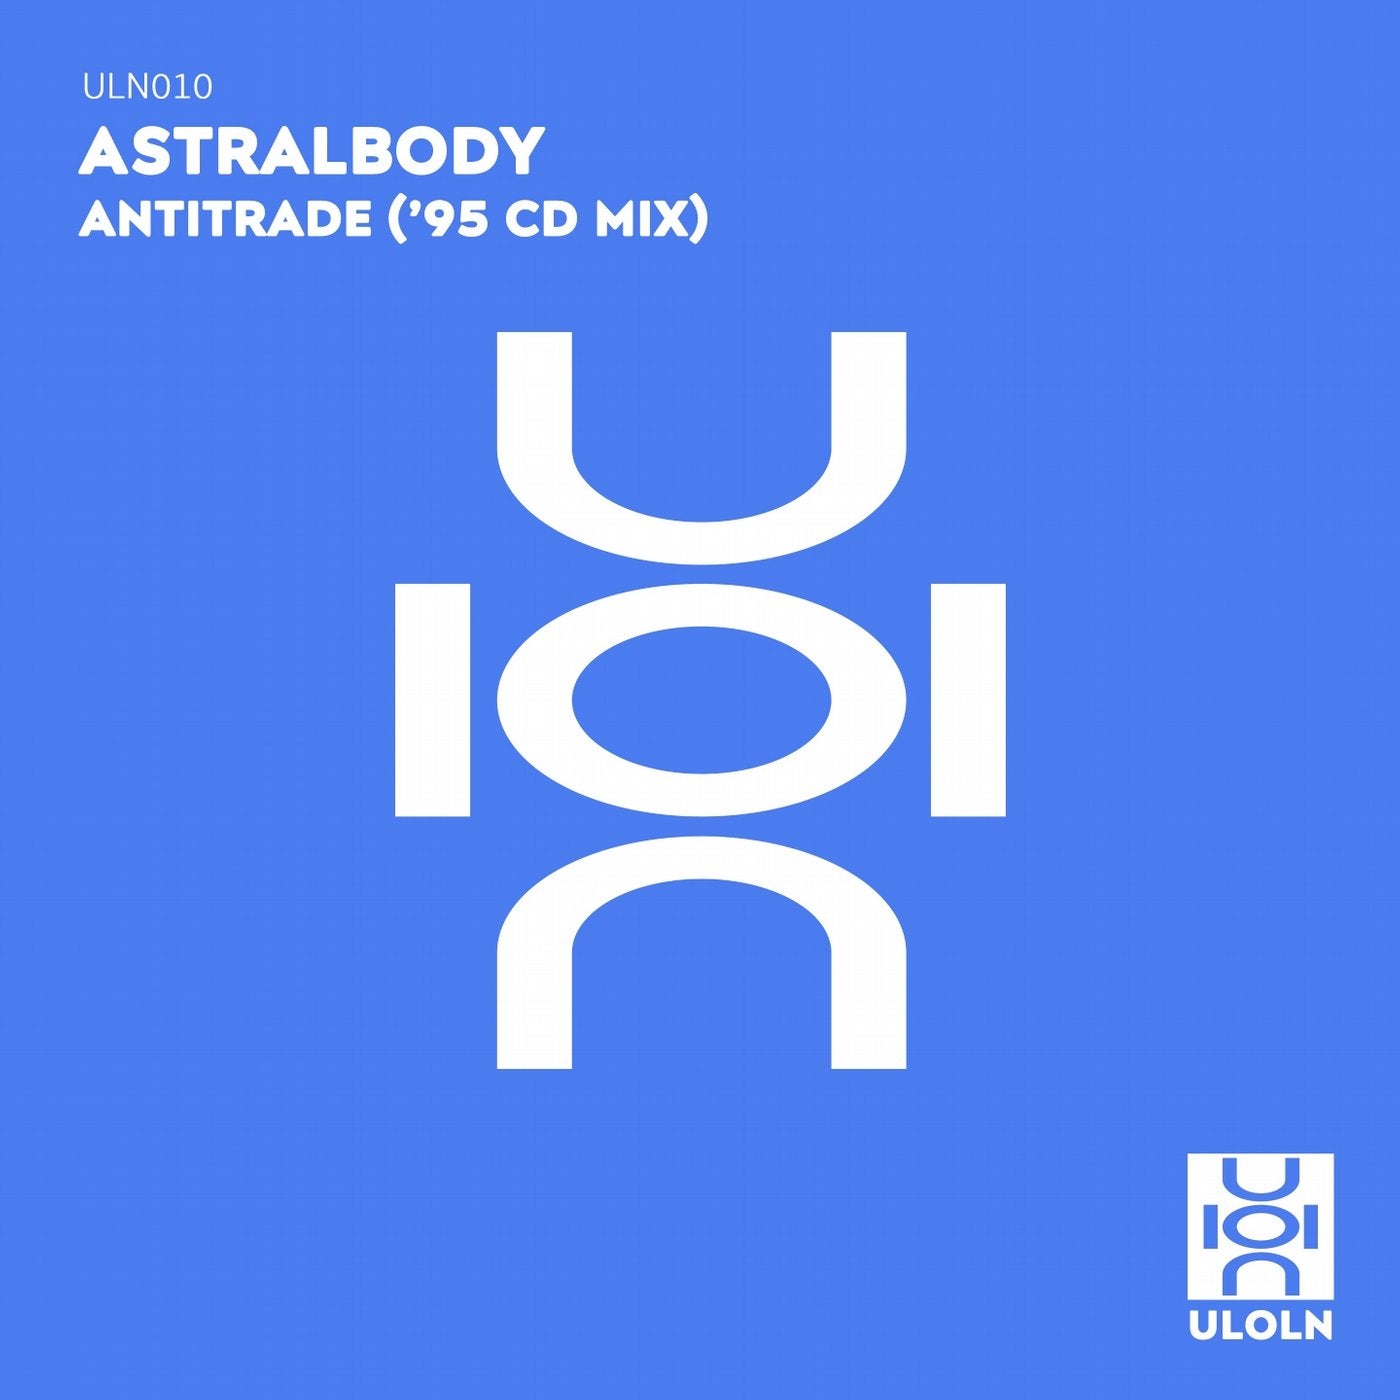 ANTITRADE ('95 CD MIX)